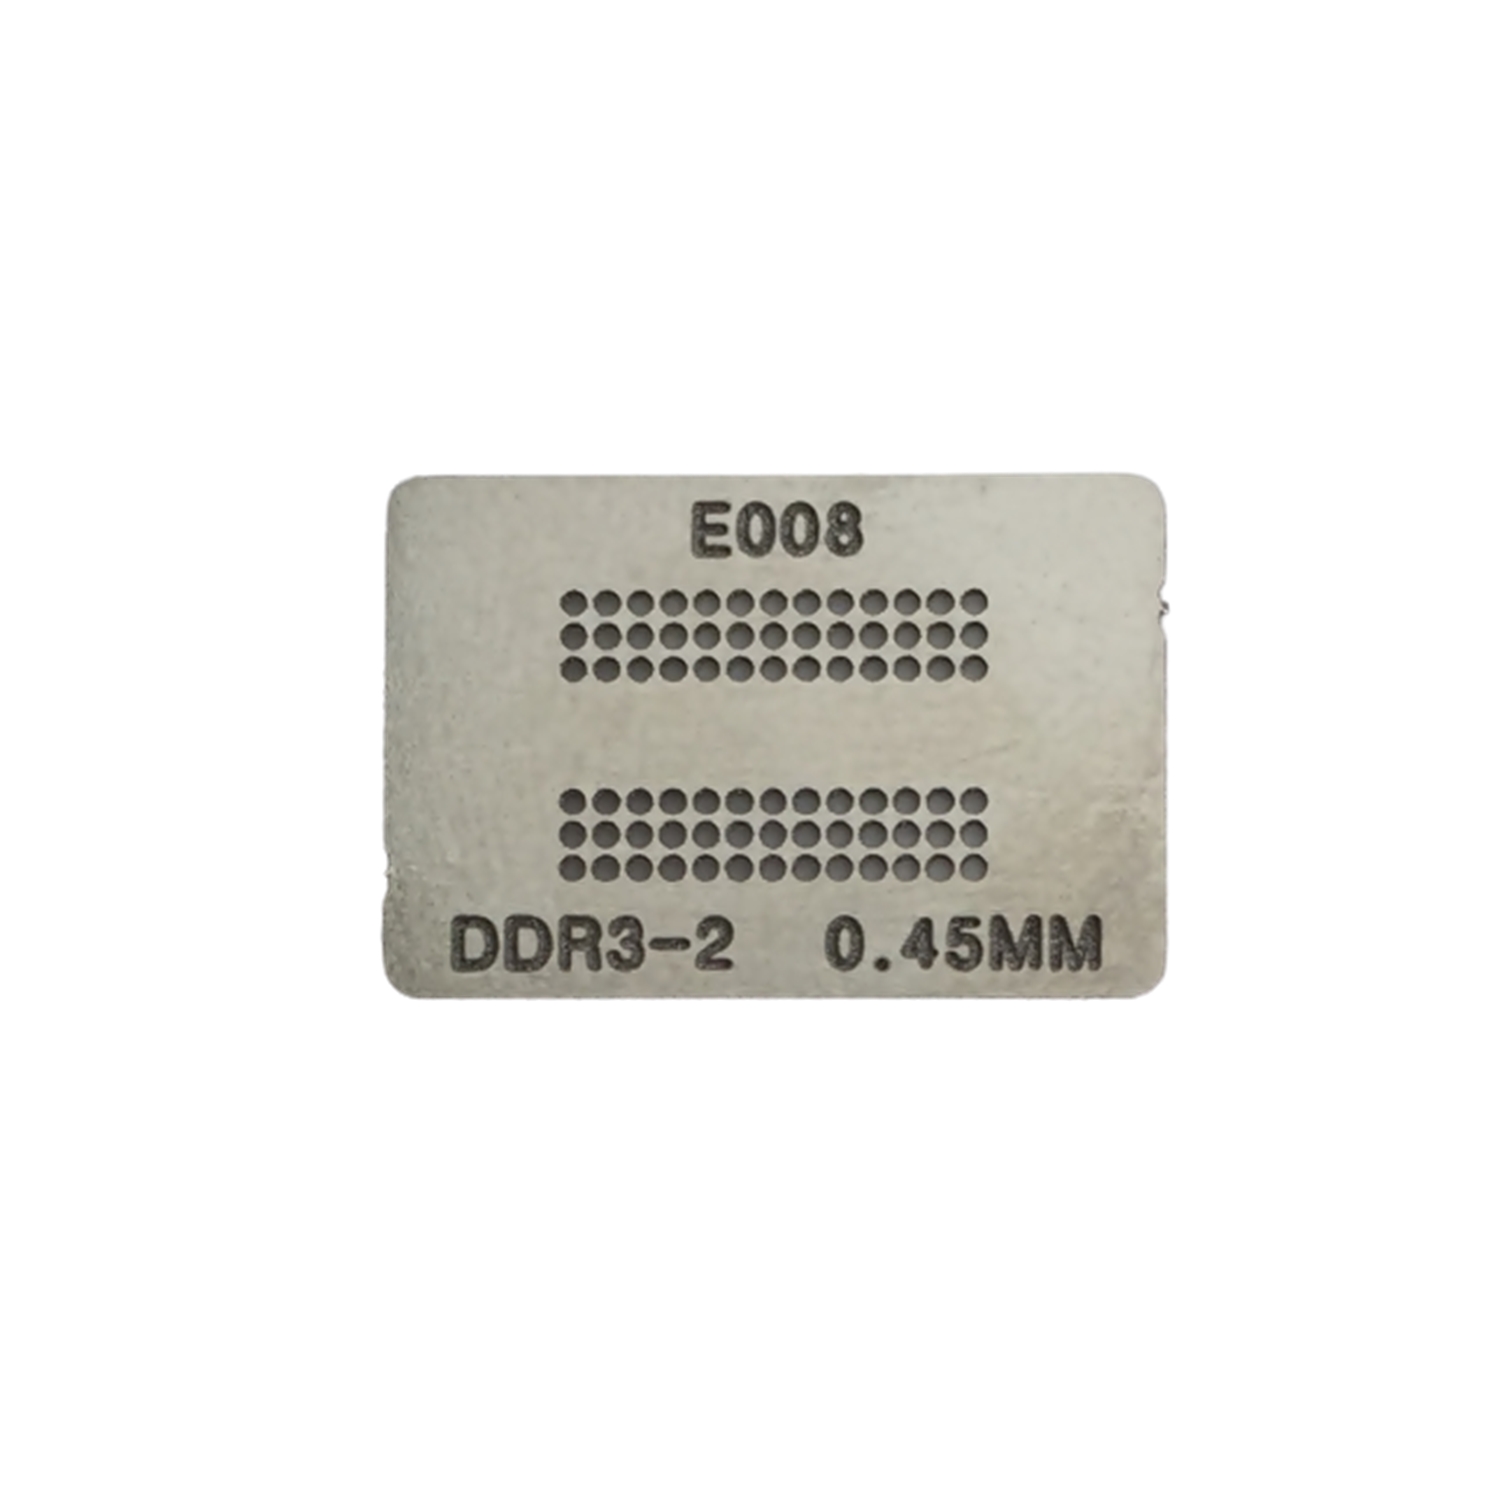 Kit stencil DDR3-2 Bga Calor Direto Reballing GM30 + solda esfera 0.45mm + suporte